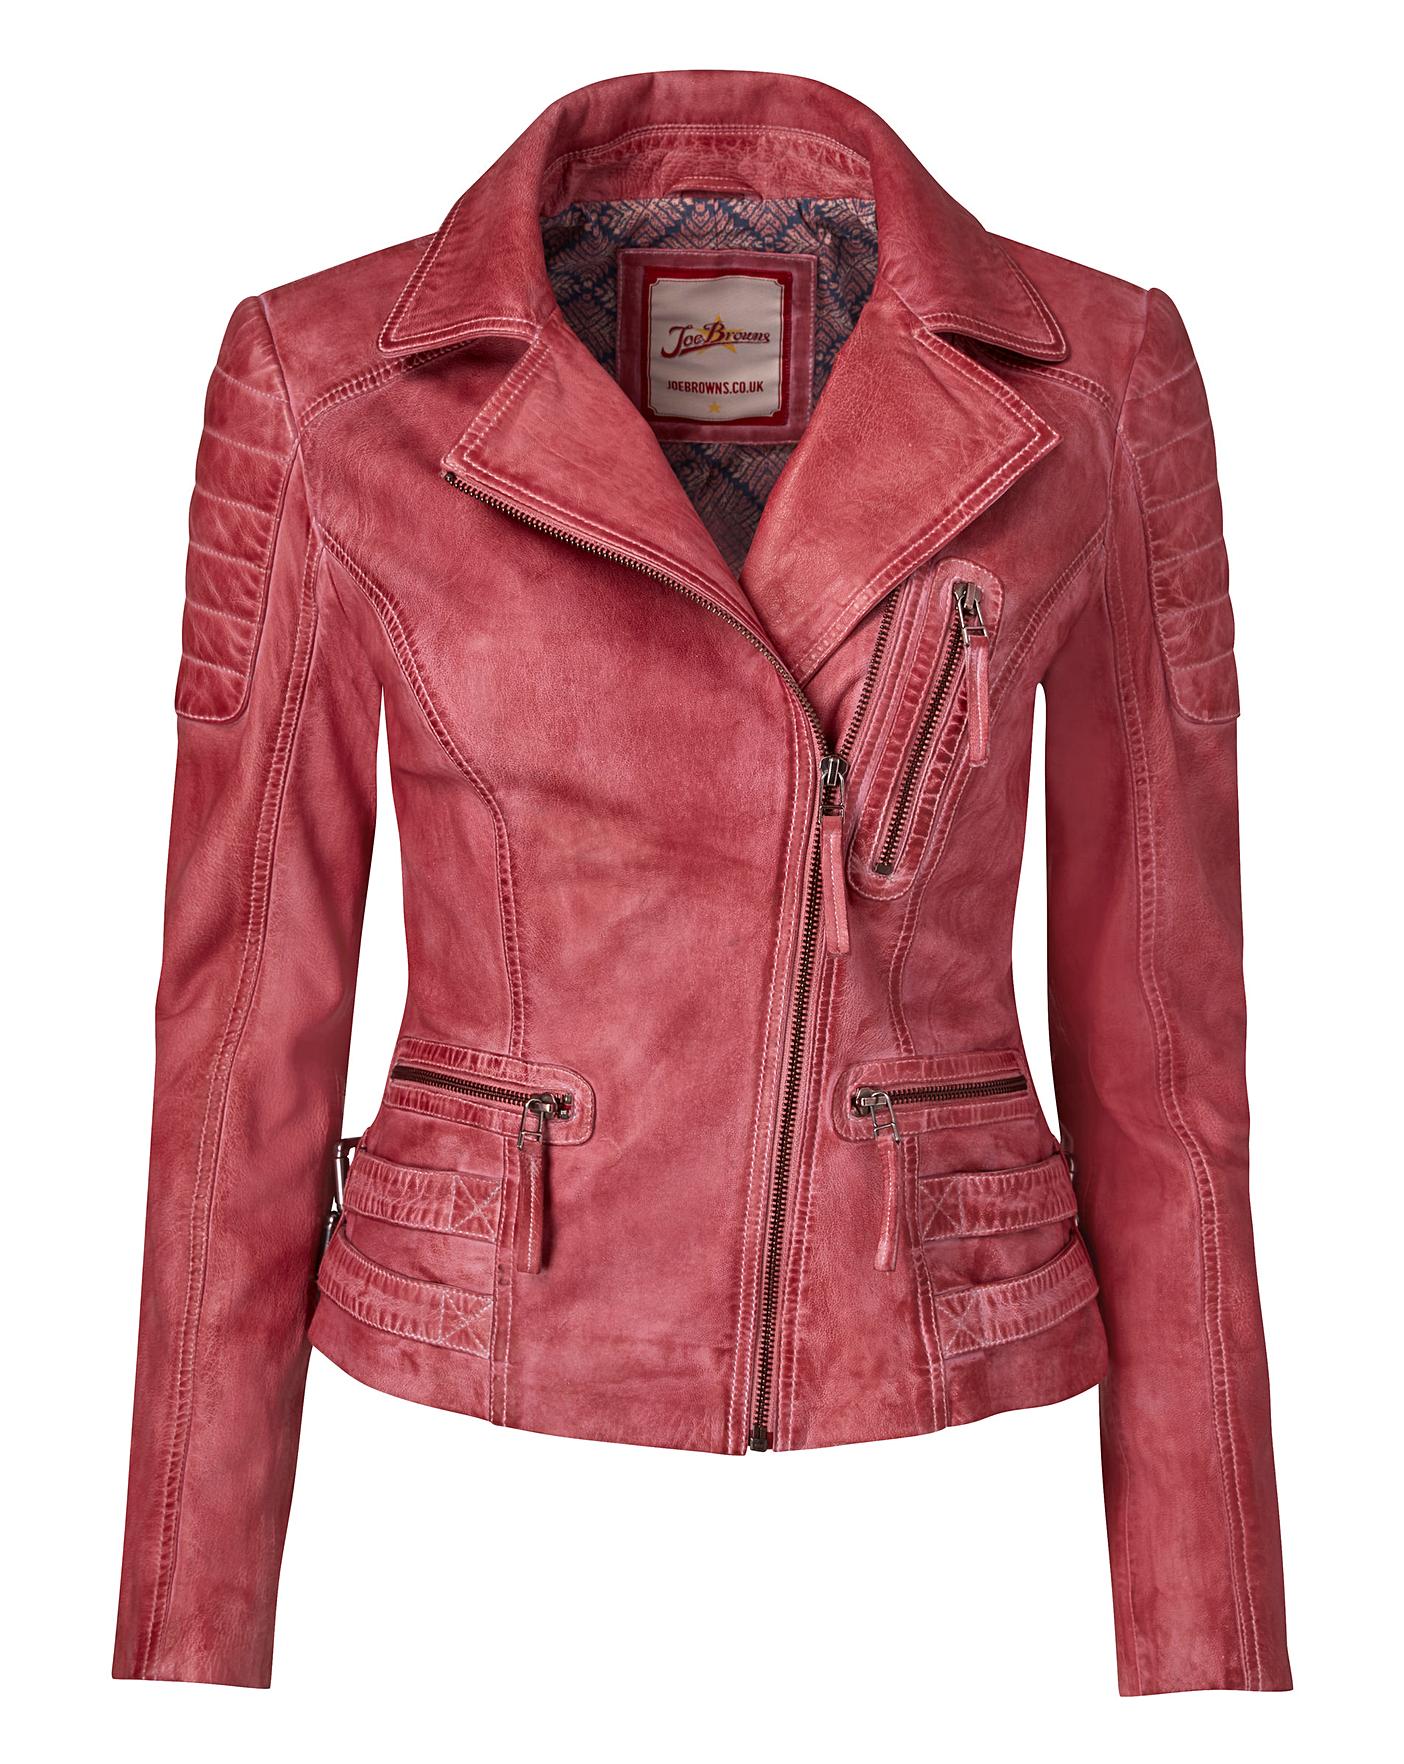 Joe Browns Rock Star Leather Jacket | Simply Be